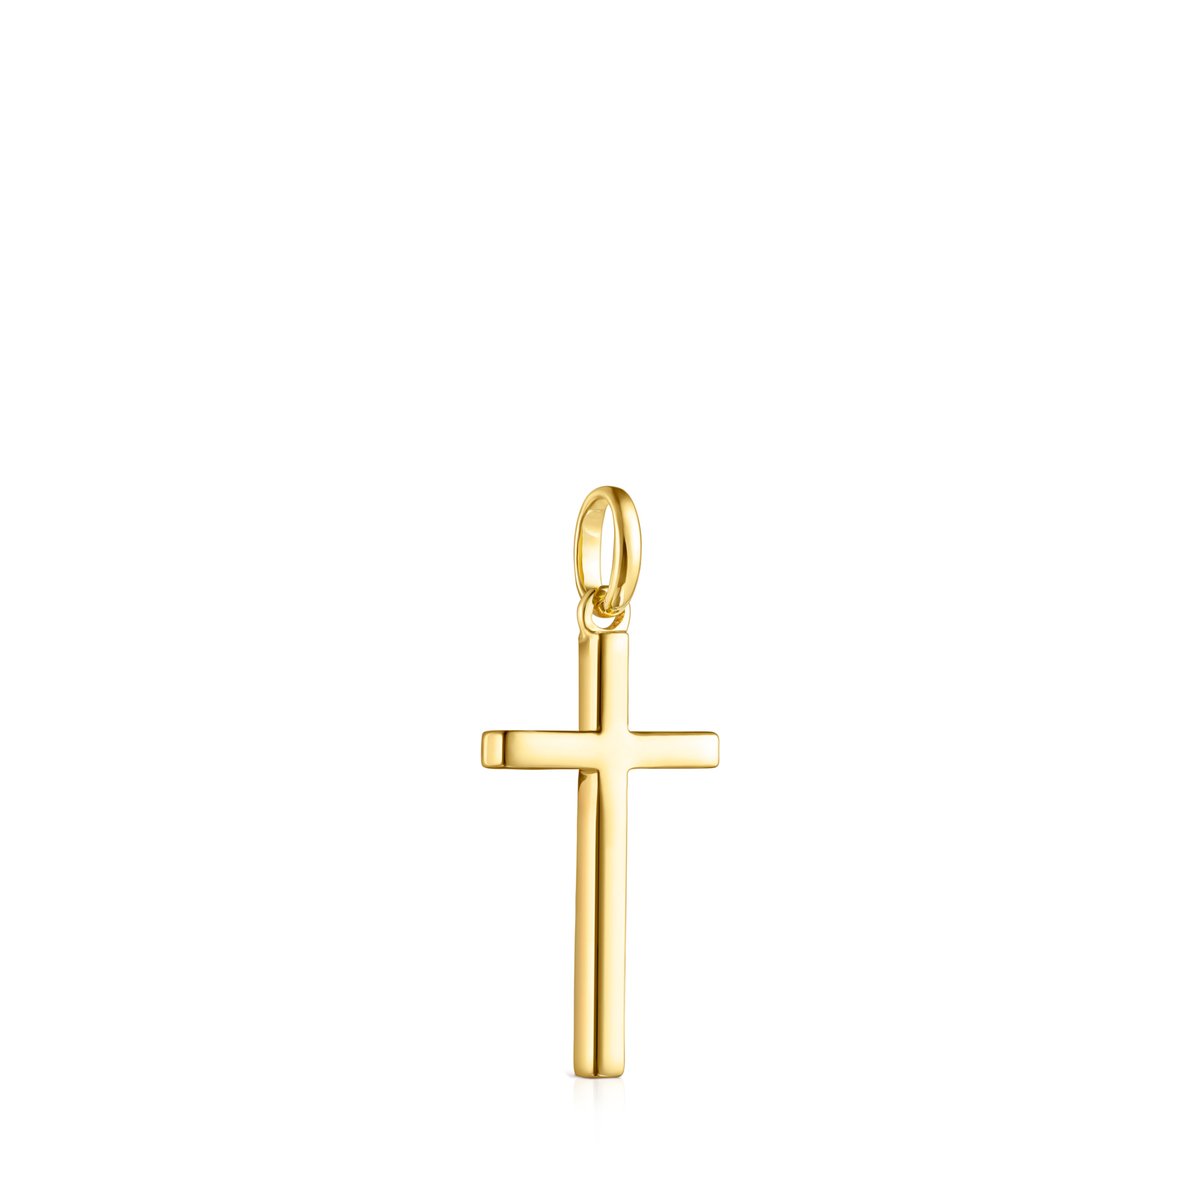 Tous Nocturne cross Pendant in Gold Vermeil with Diamonds 918444540